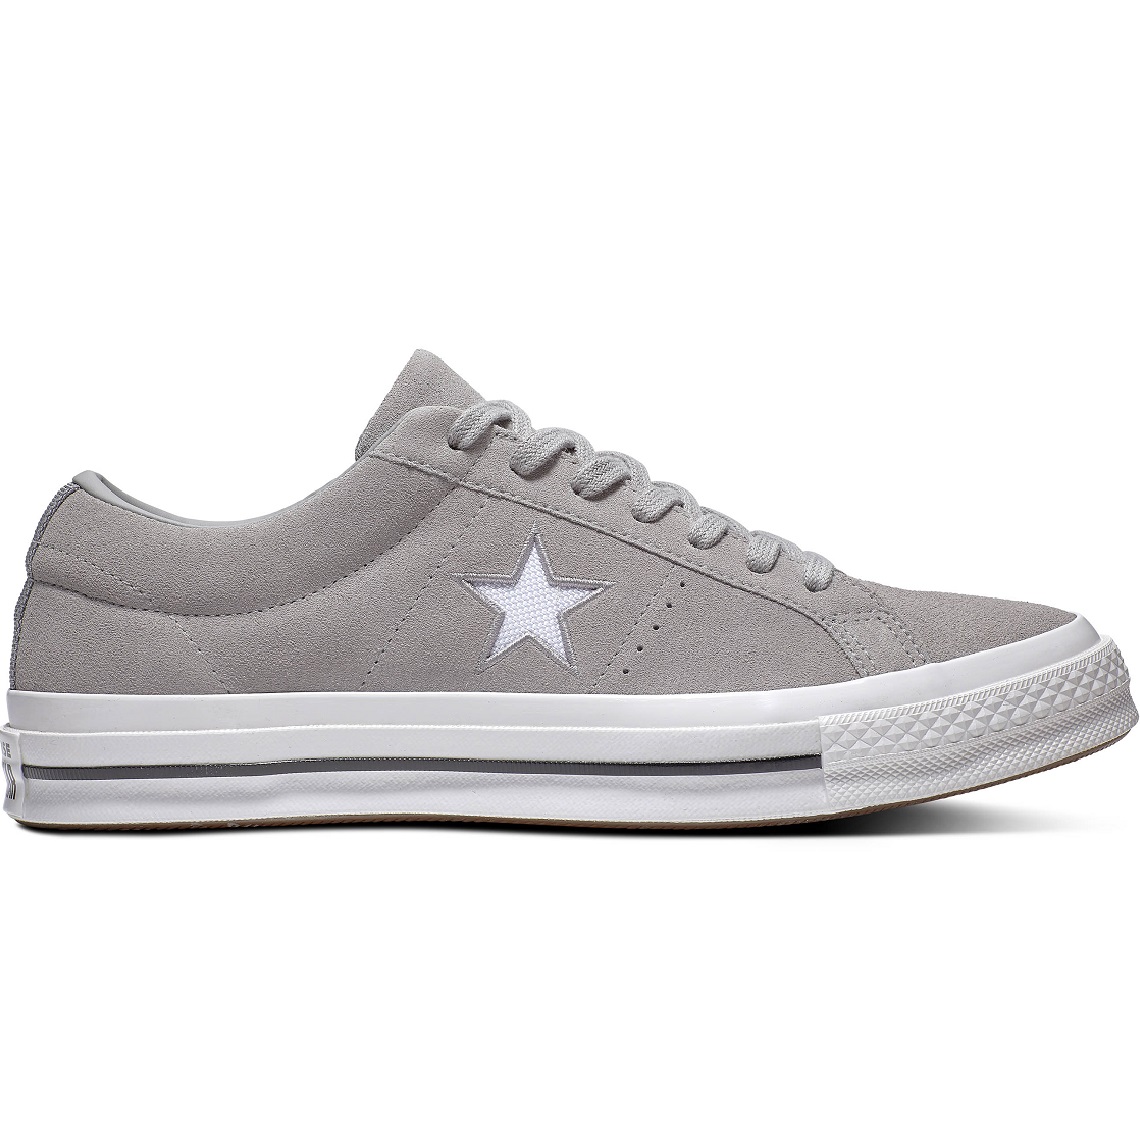 Converse One Star Suede Sneaker